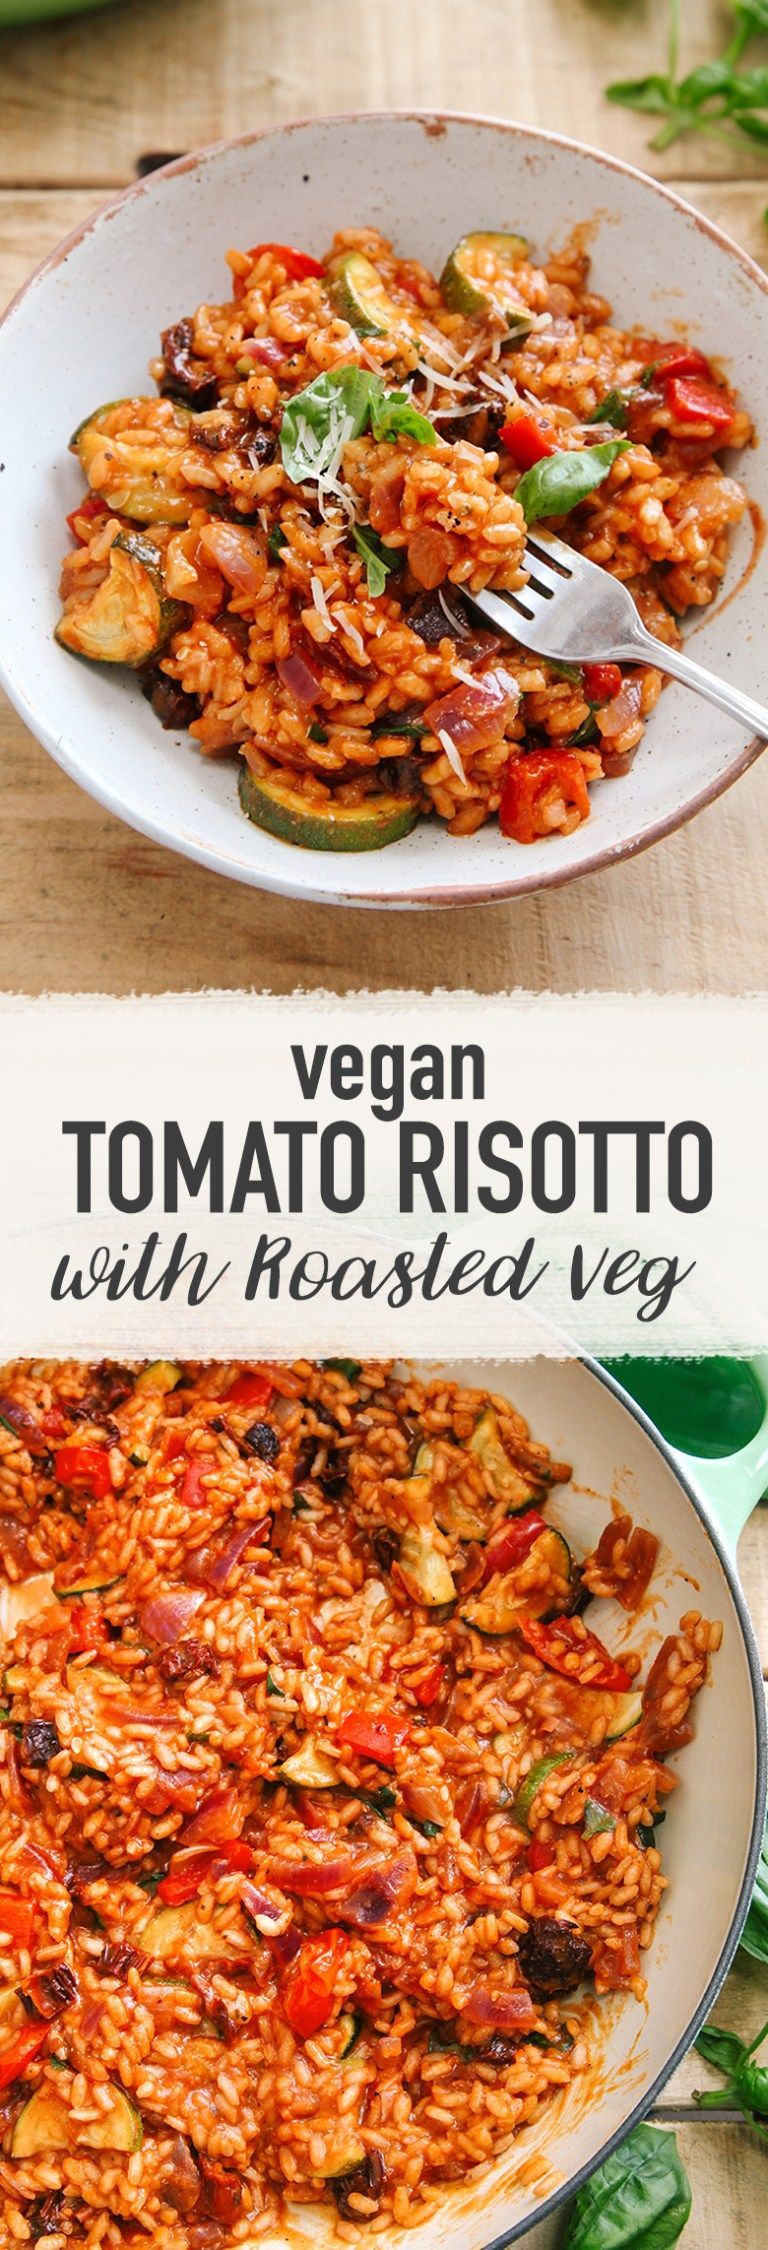 Creamy Tomato & Roasted Veg Risotto (Vegan) -   12 healthy recipes Vegetables glutenfree ideas